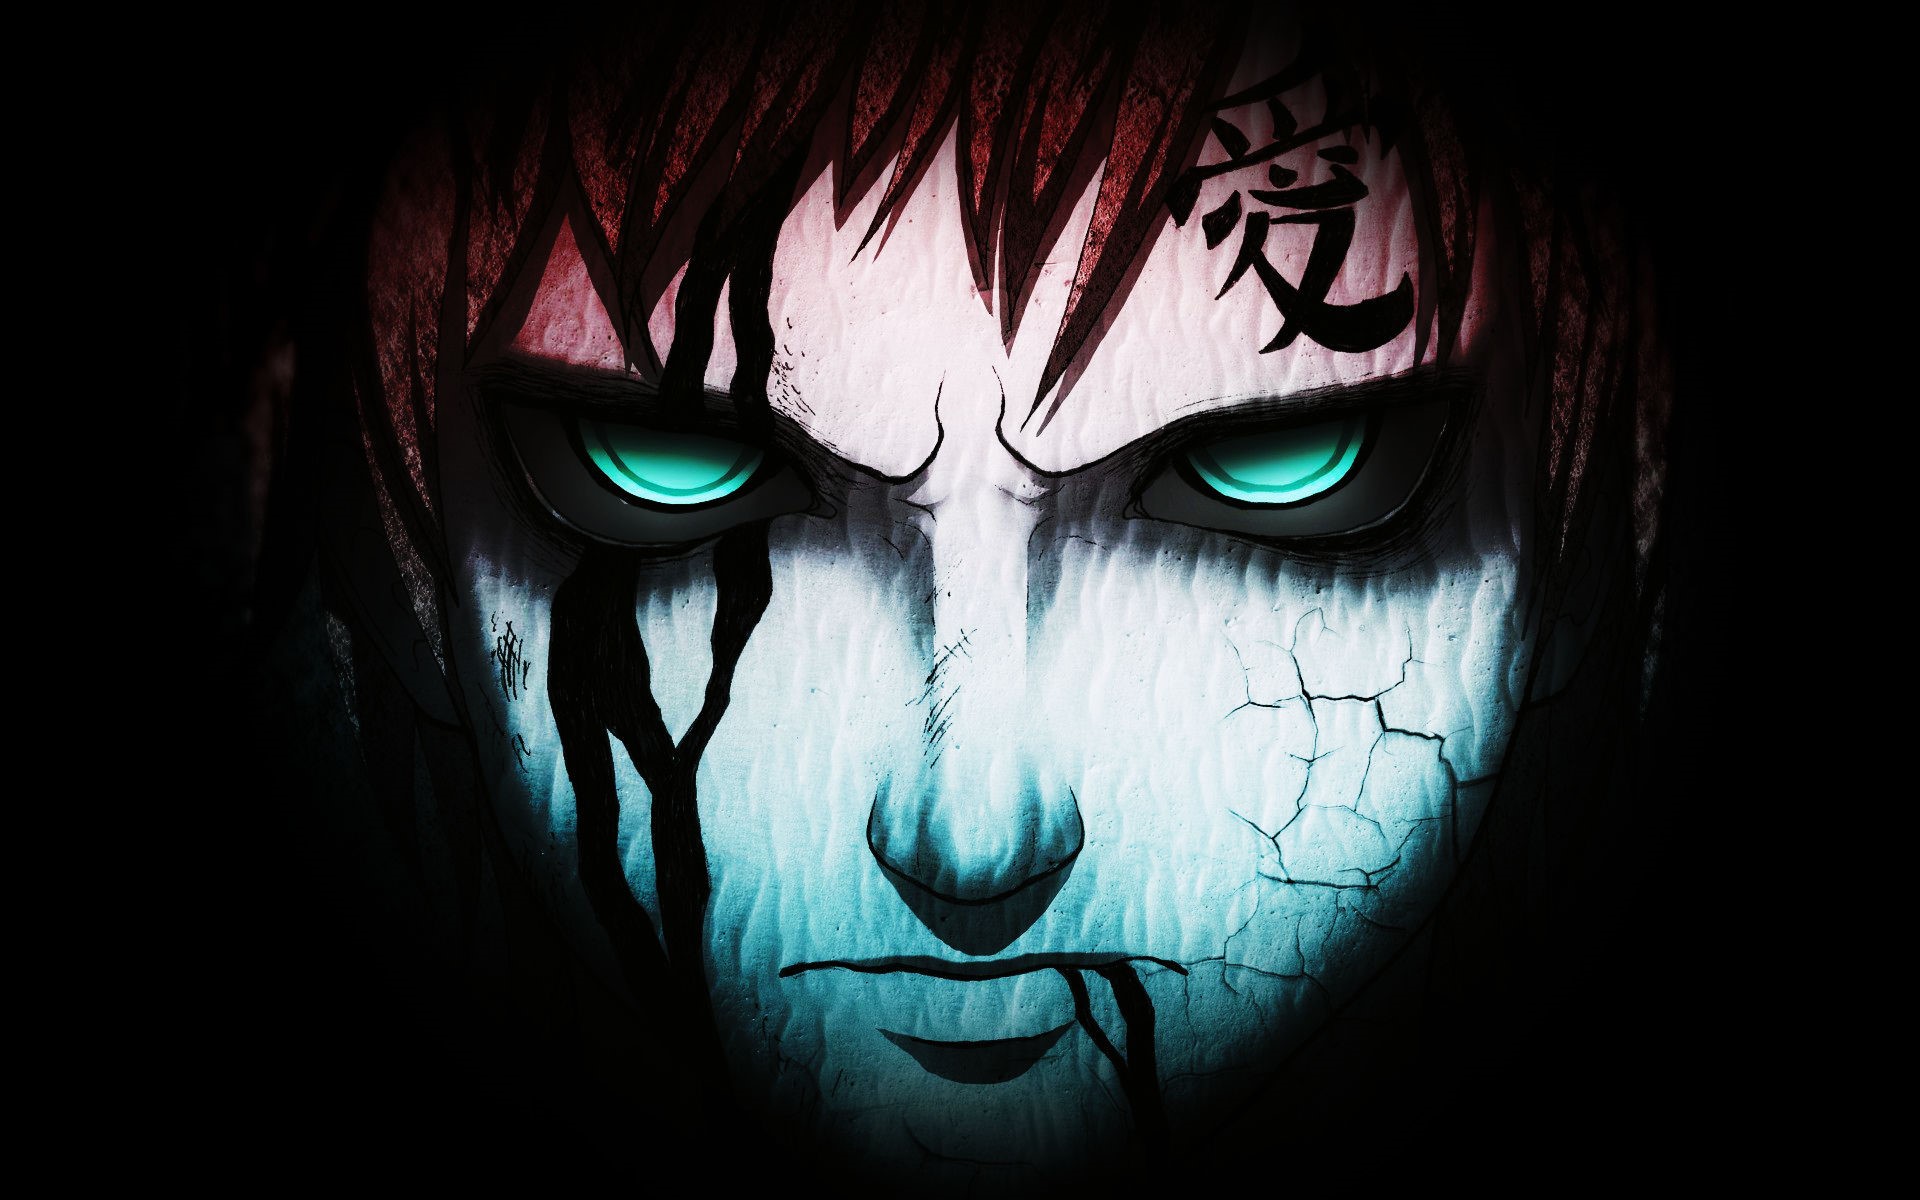 angry anime eyes by bgirlkike on DeviantArt